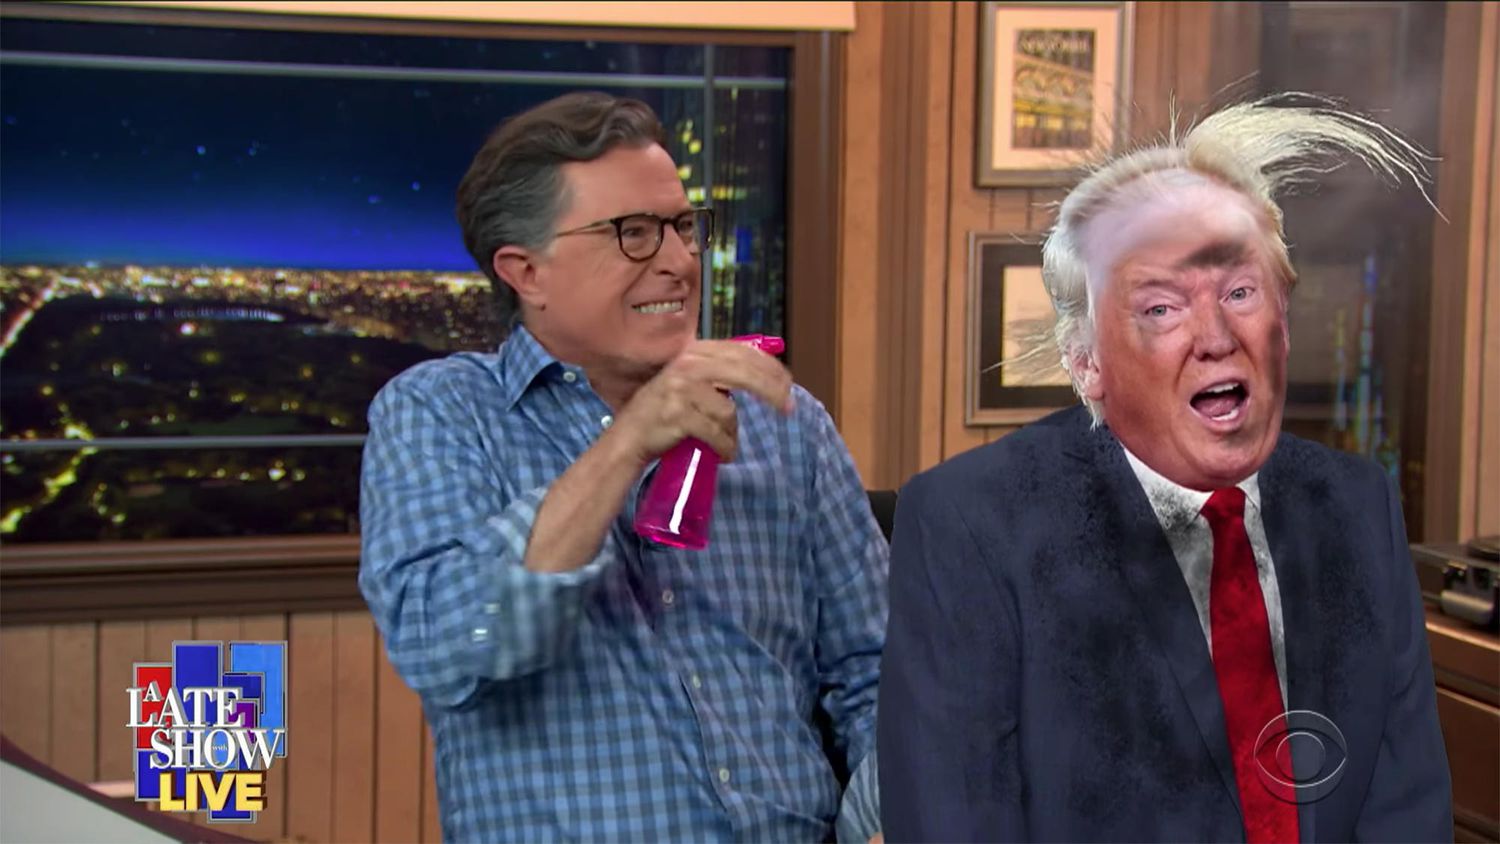 Trump Trashes New York, Joe Unveils 'Bidencare' At Final Debate - Stephen Colbert's LIVE Monologue